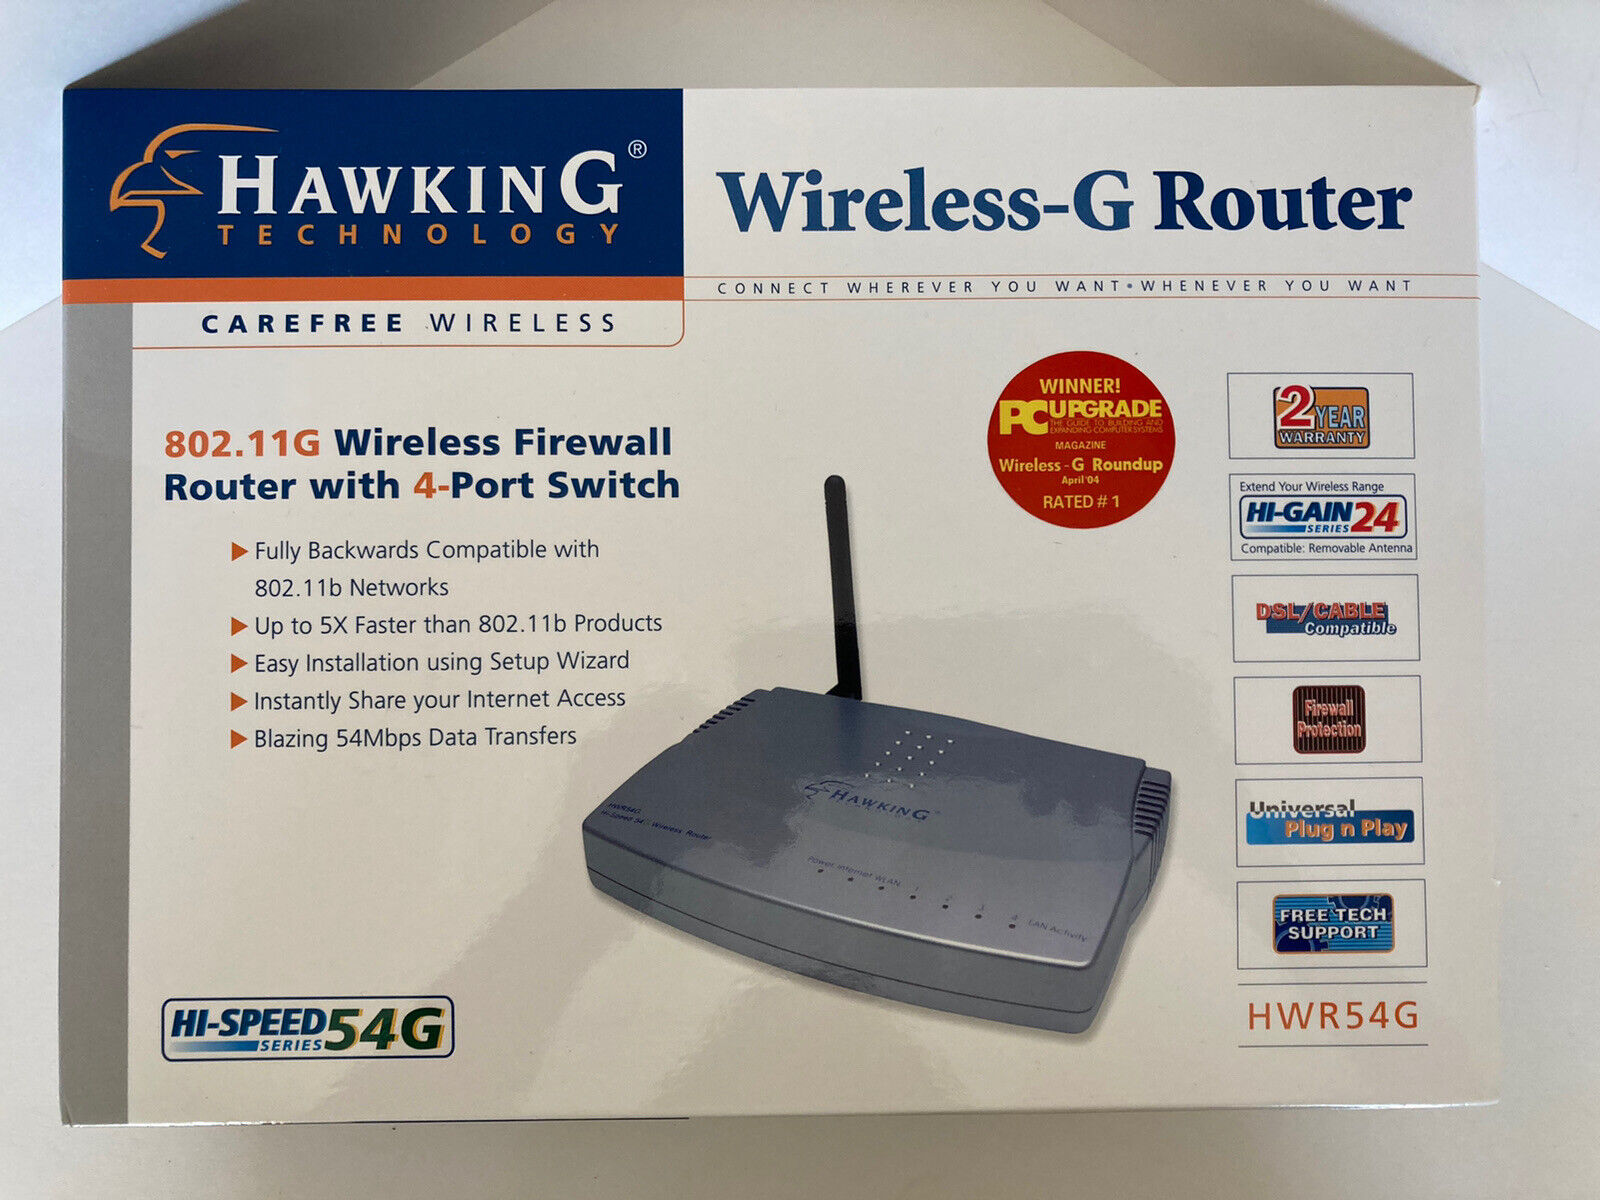 Hawking Technology Wireless-G Router HWR54G